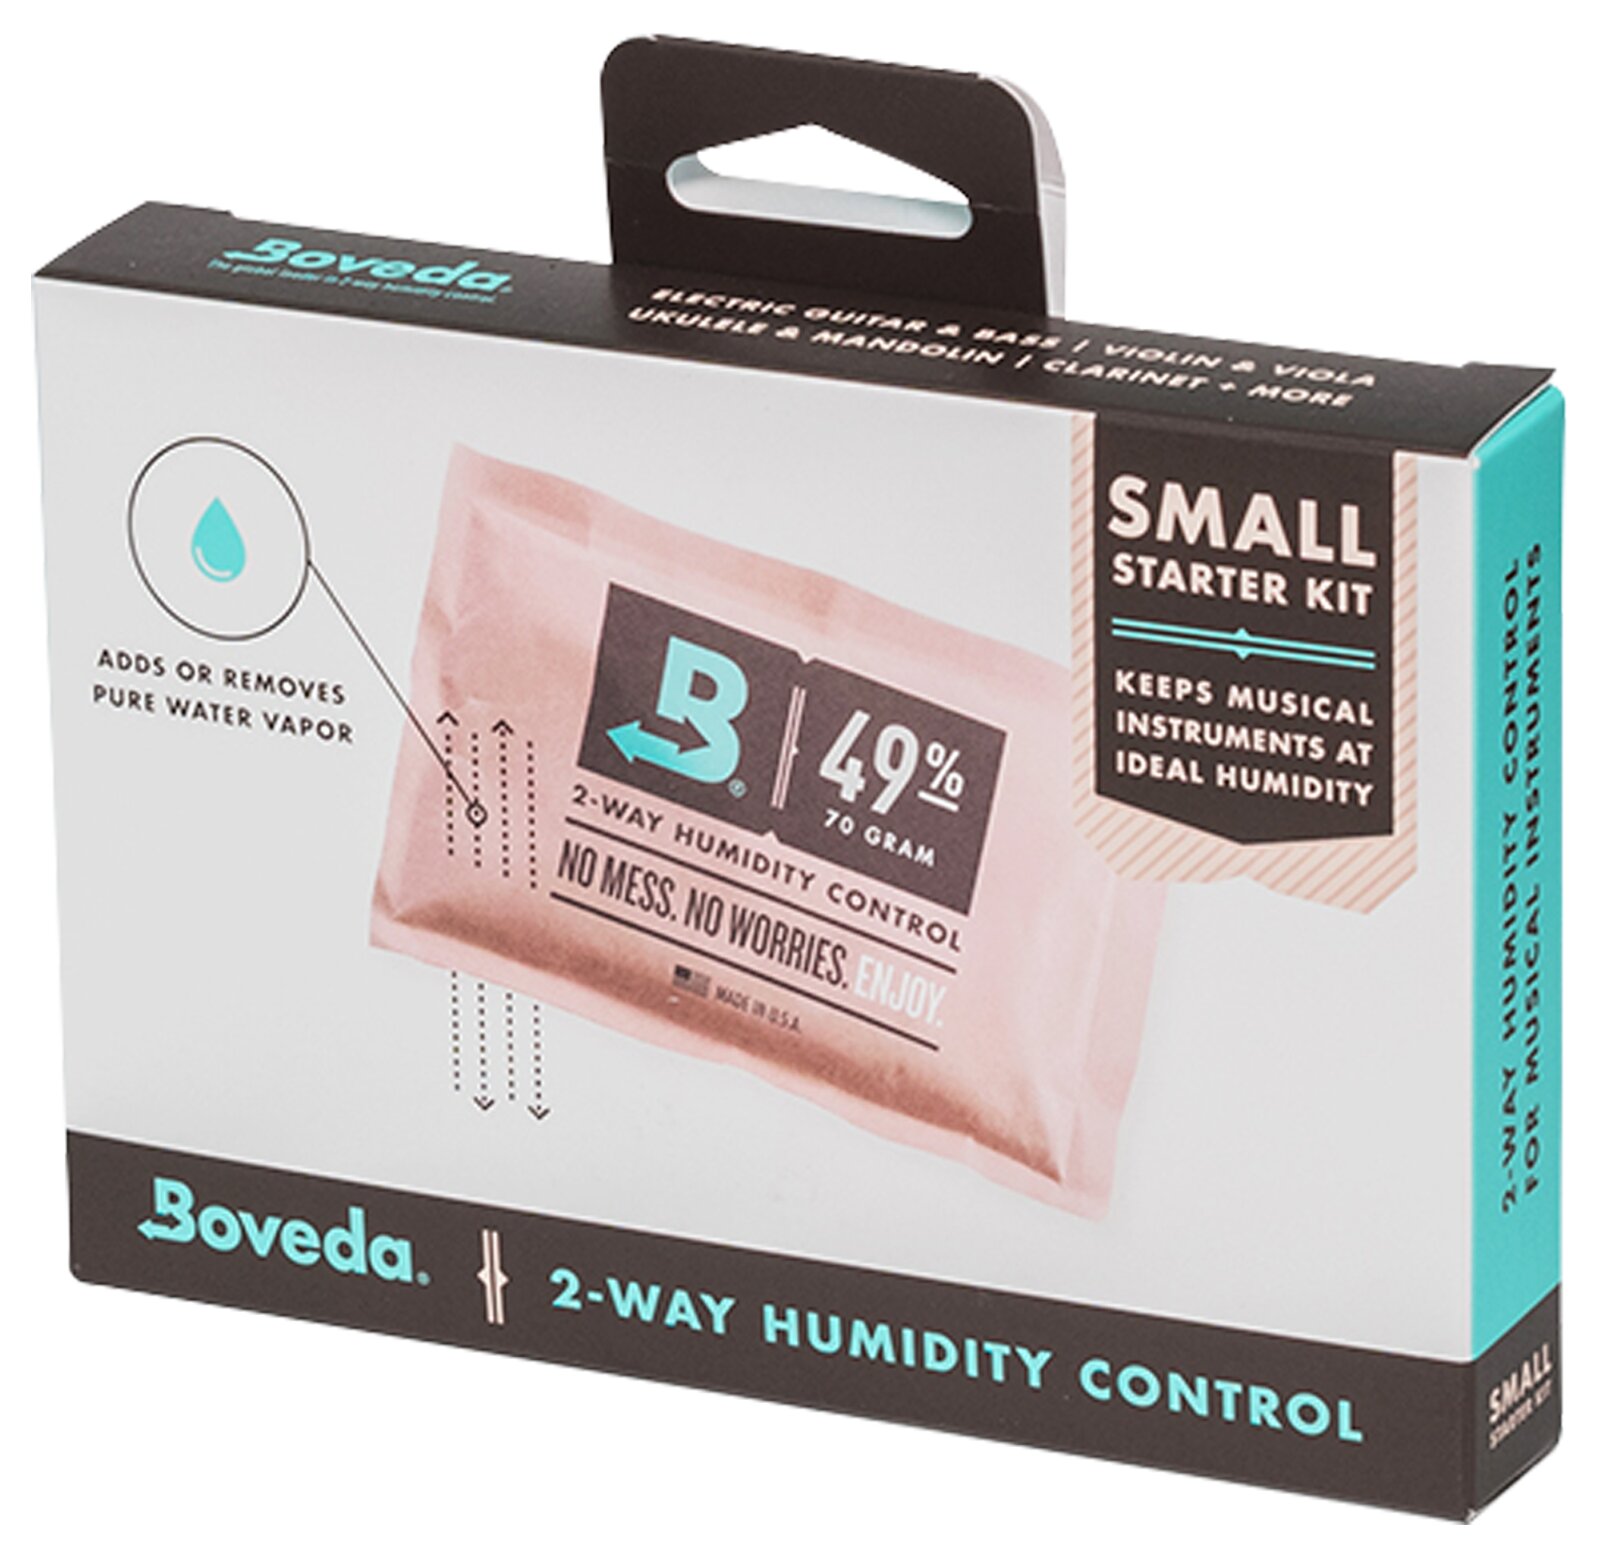 Boveda Air humidity management 2-way starter kit small : photo 1